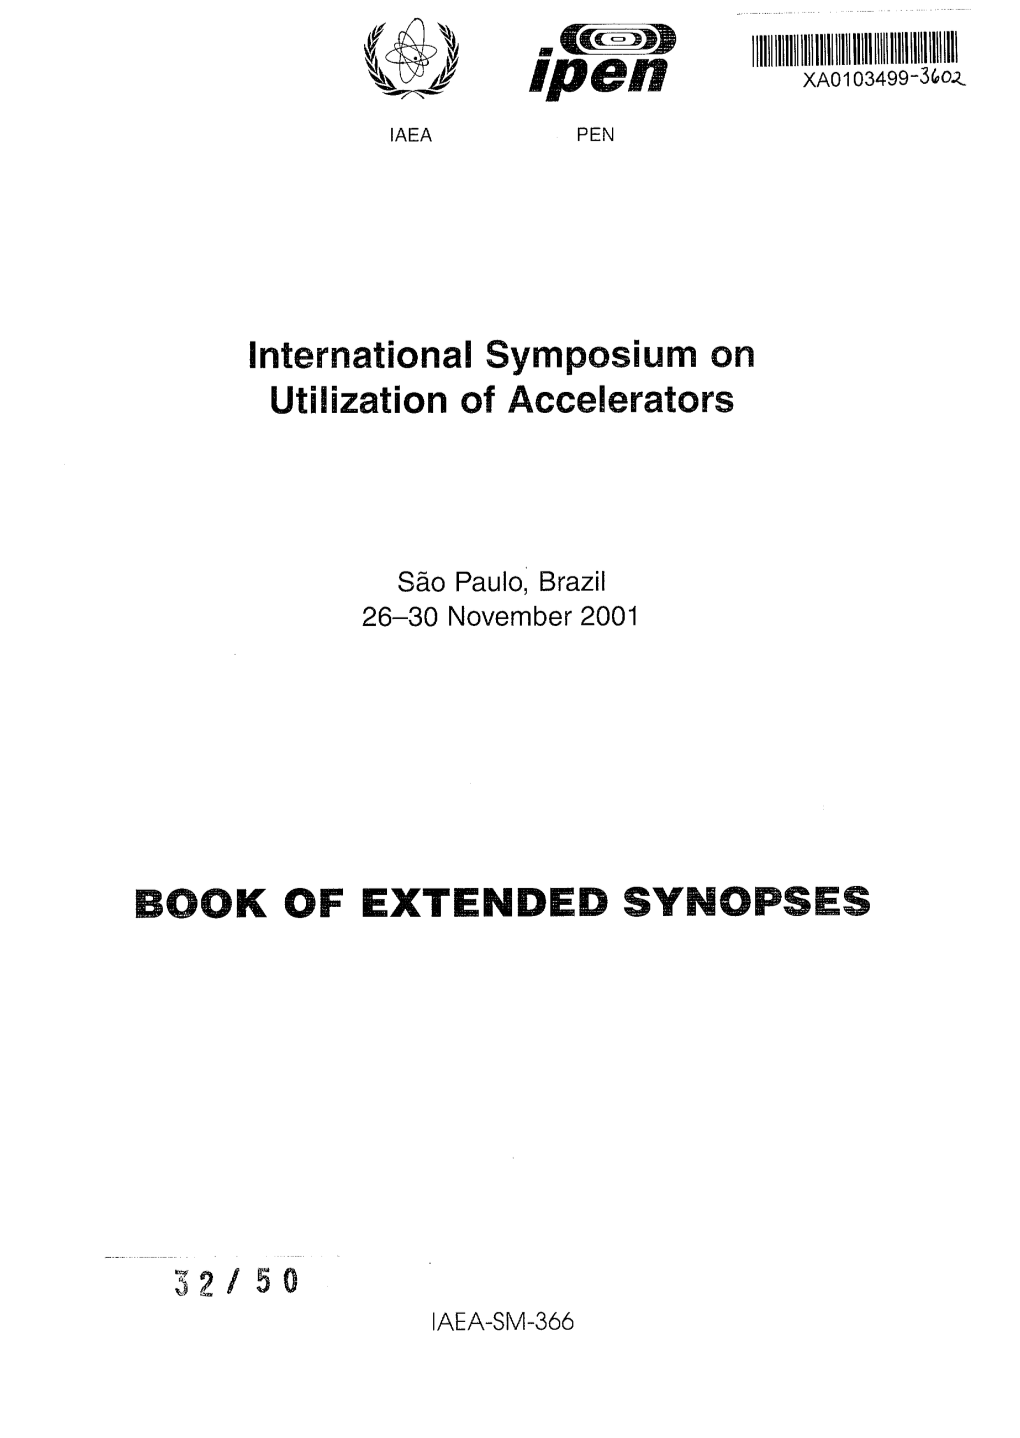 International Symposium on Utilization of Accelerators